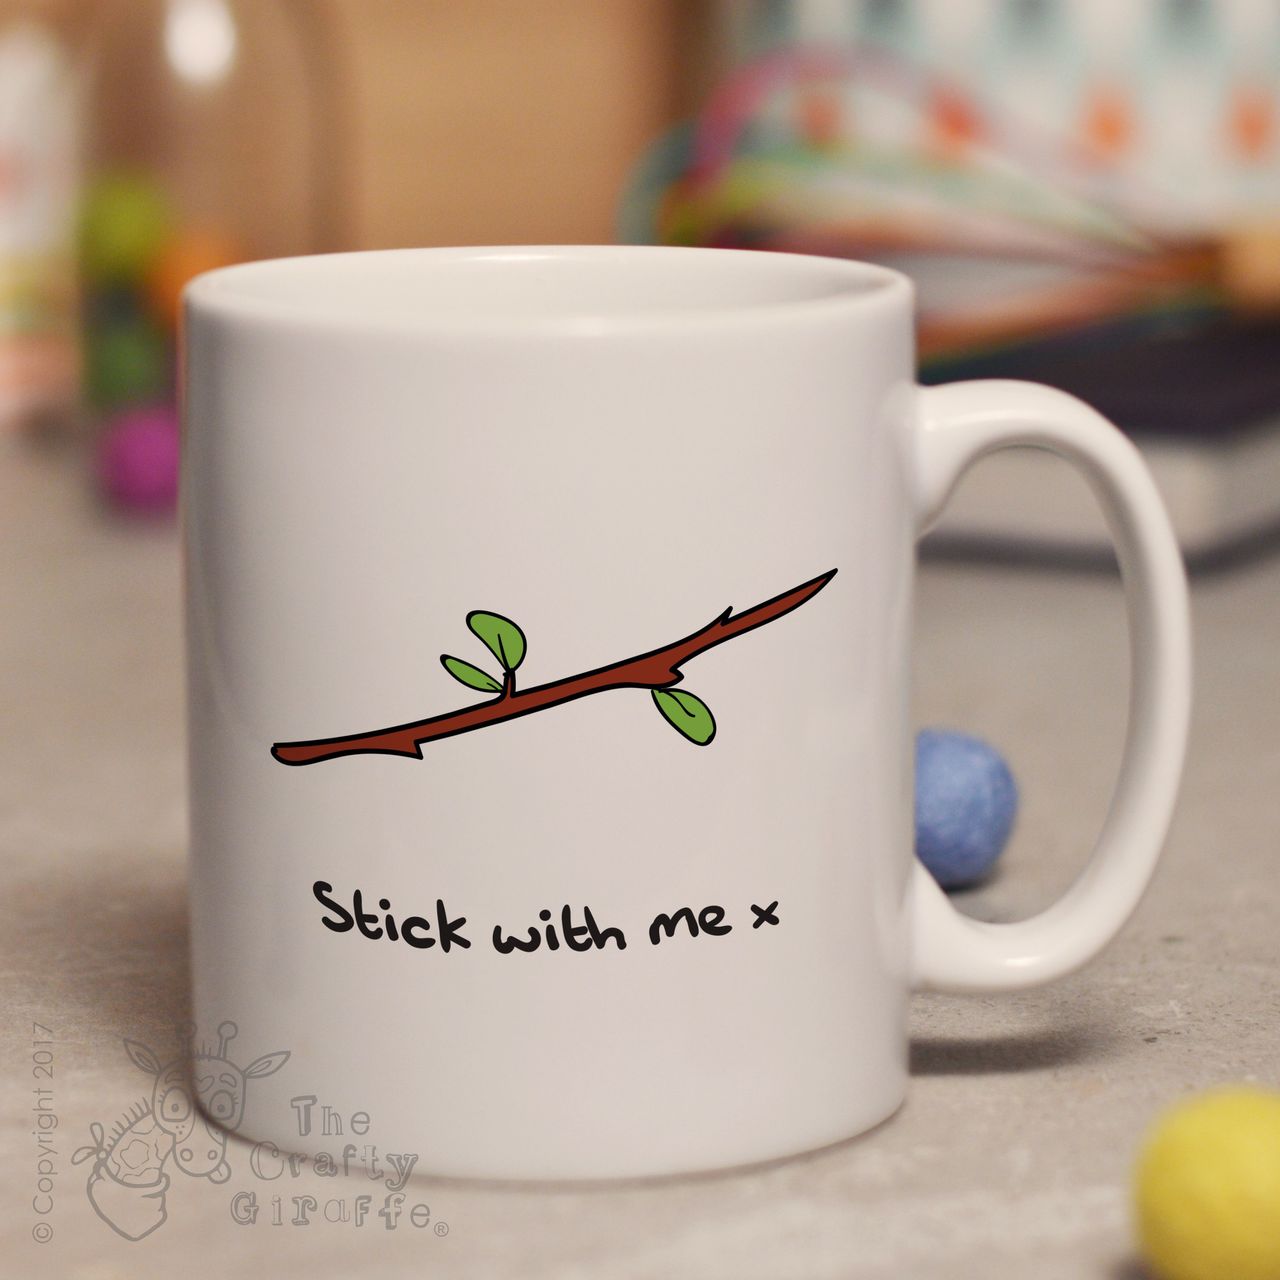 Stick with me x mug